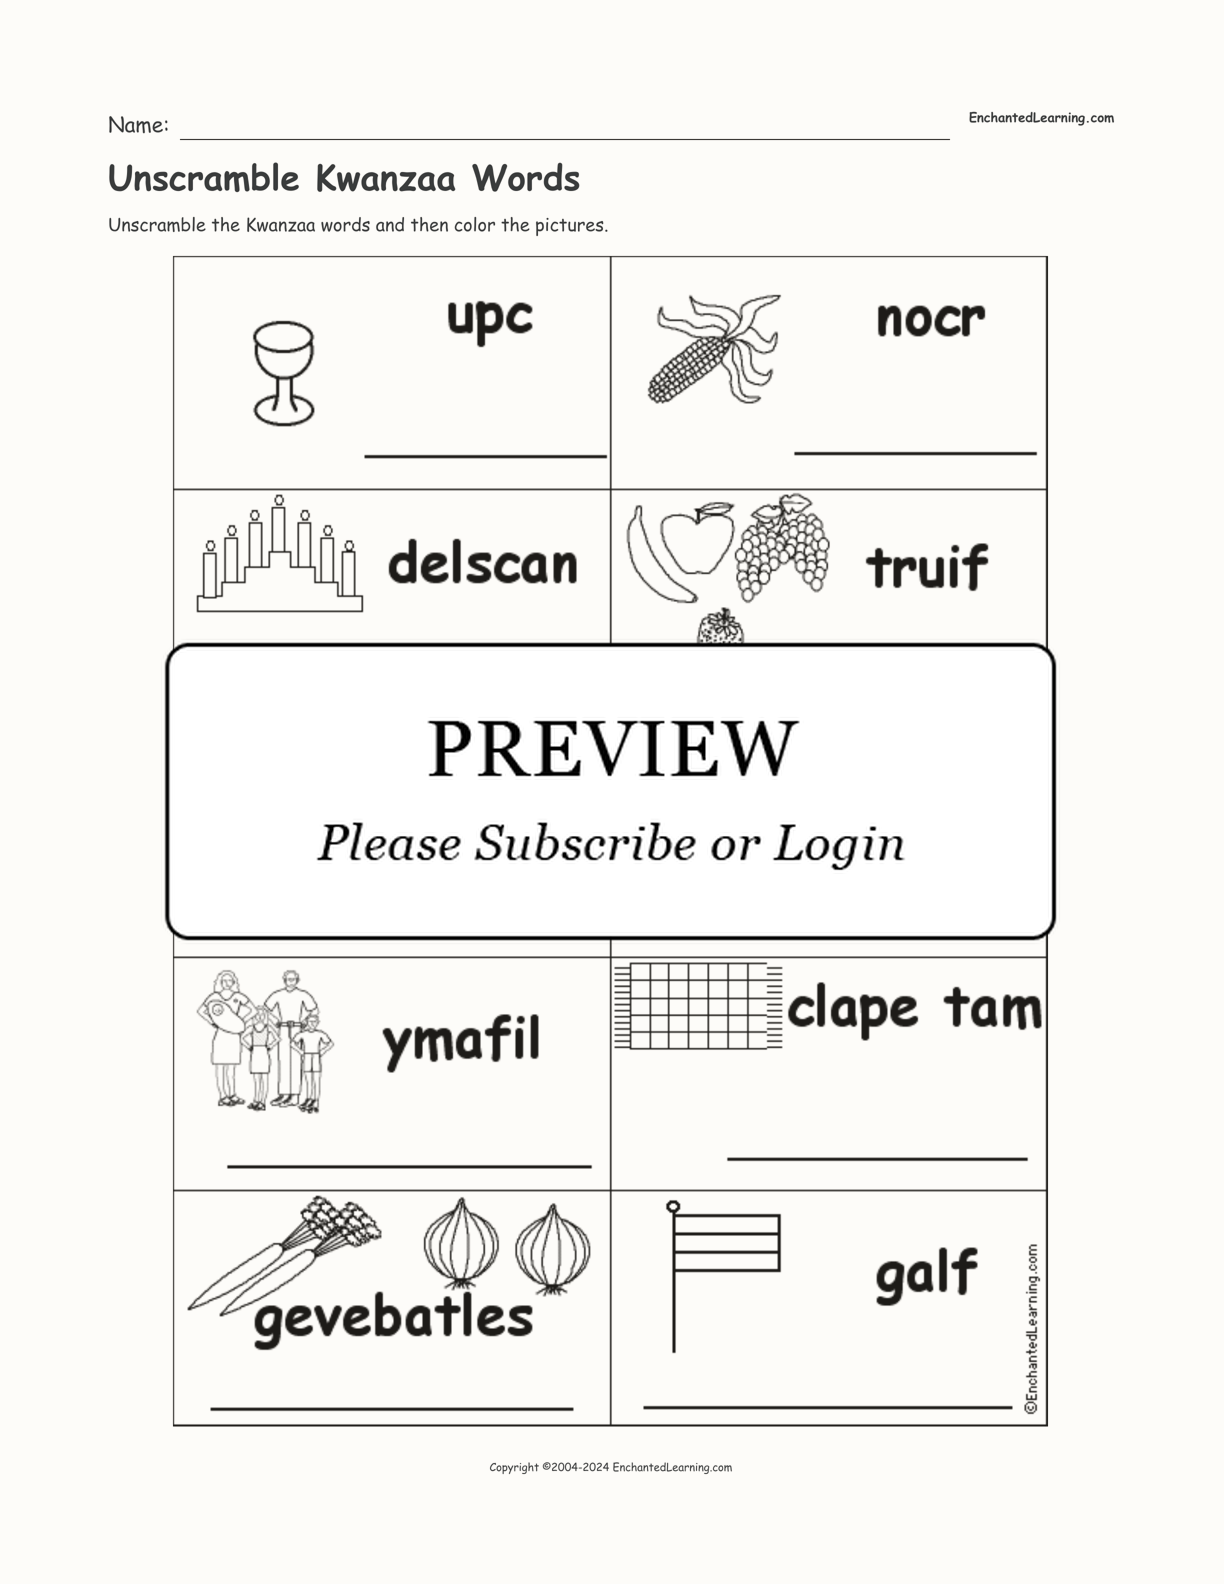 Unscramble Kwanzaa Words interactive worksheet page 1